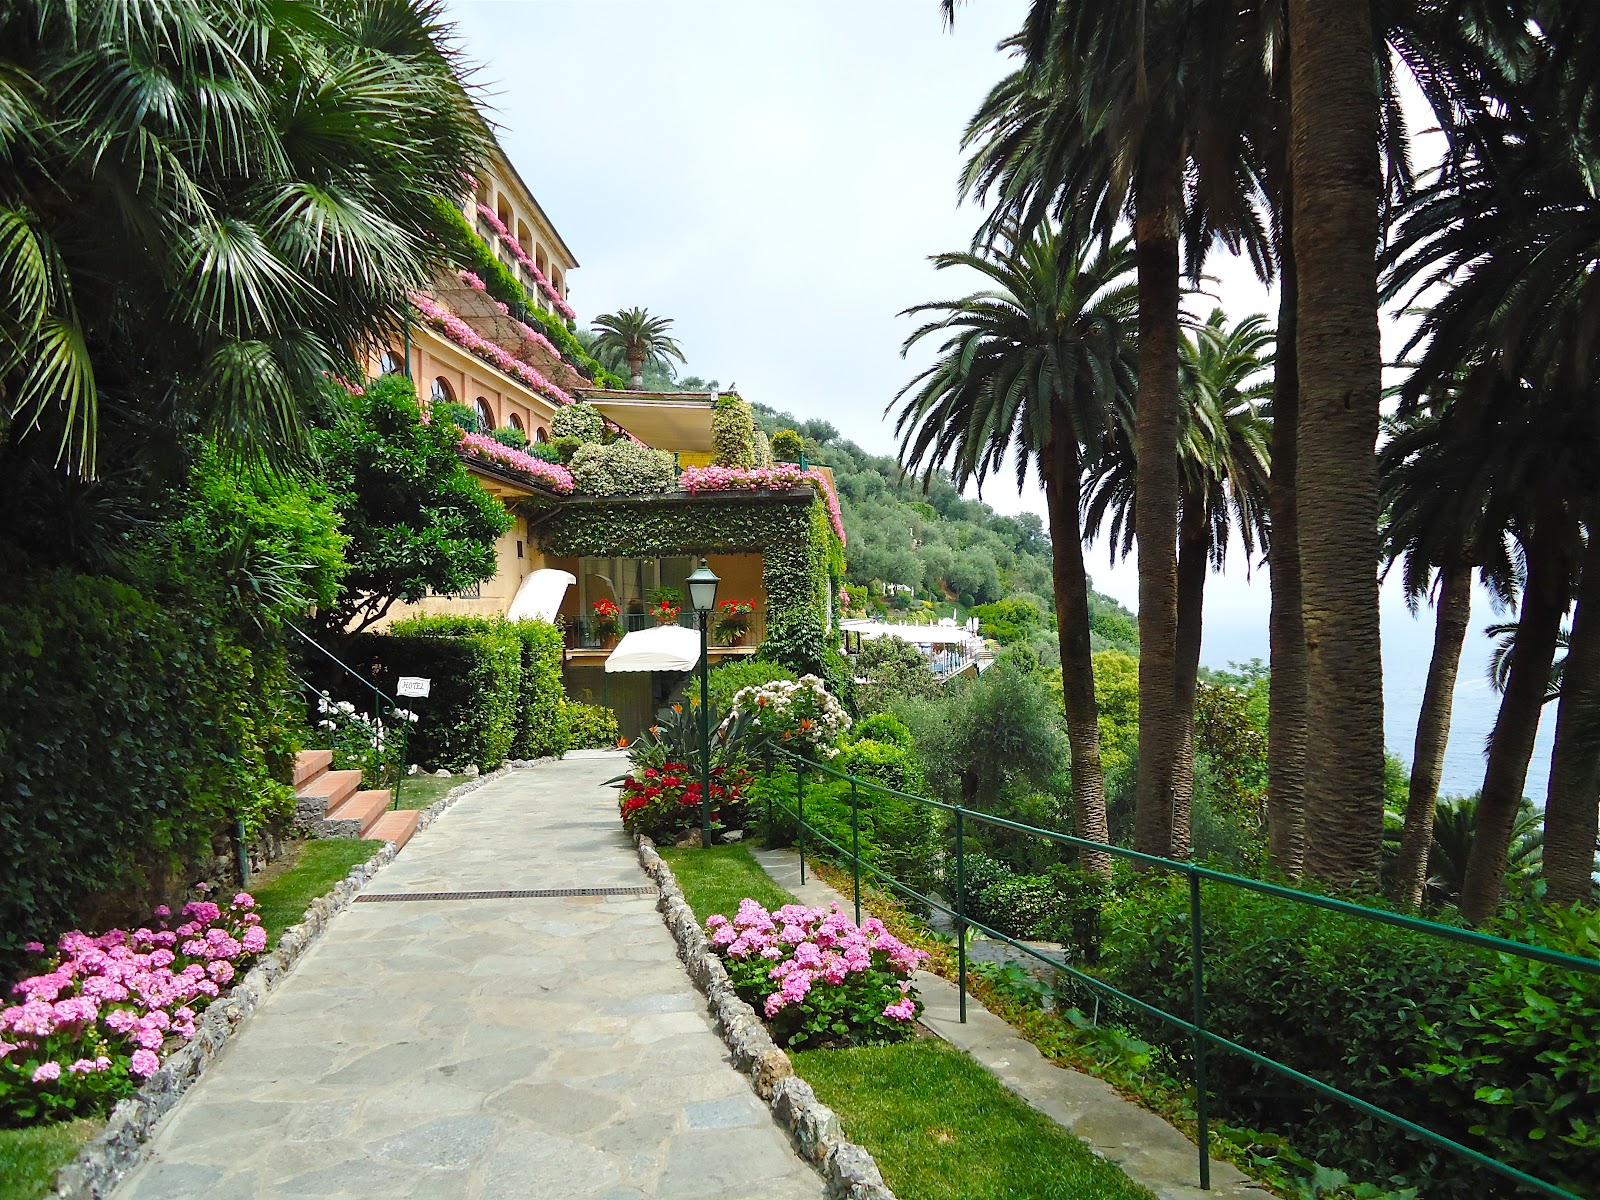 Glisten To This: Hotel Splendido, Portofino, Italy